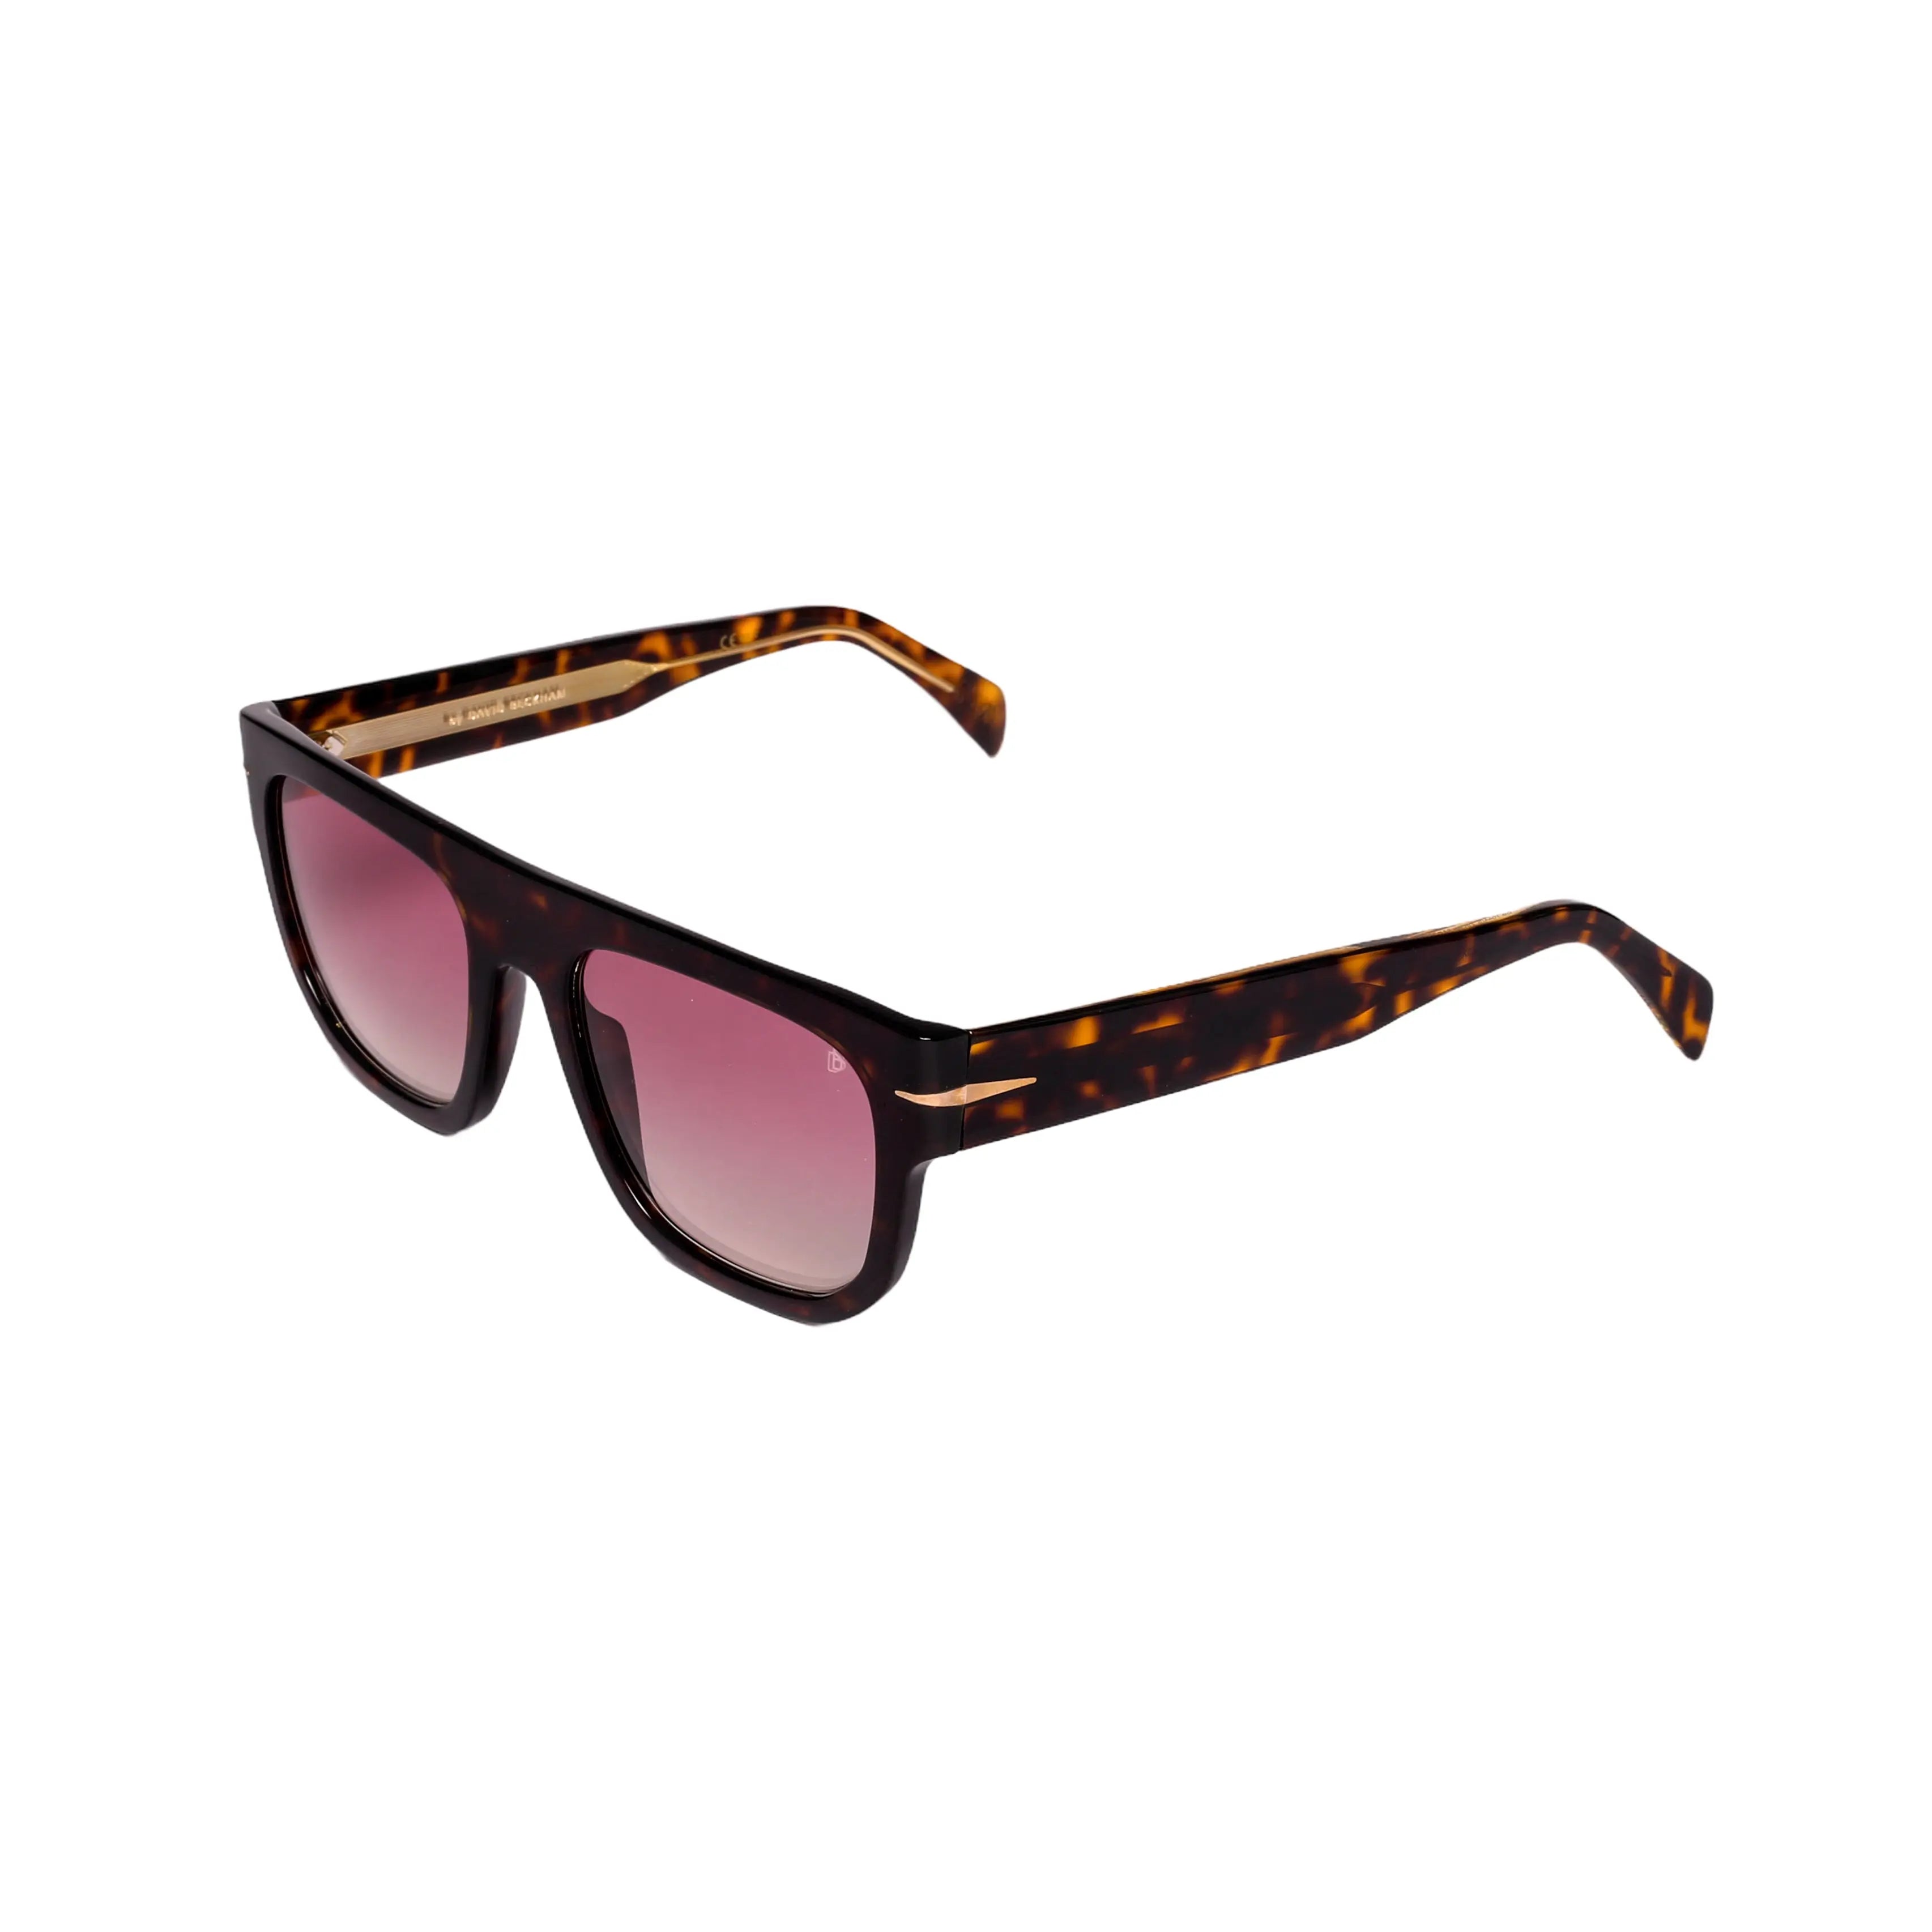 Sunglasses David Beckham DB 7092/S 205312 (807 IR) 205312 Man | Free  Shipping Shop Online